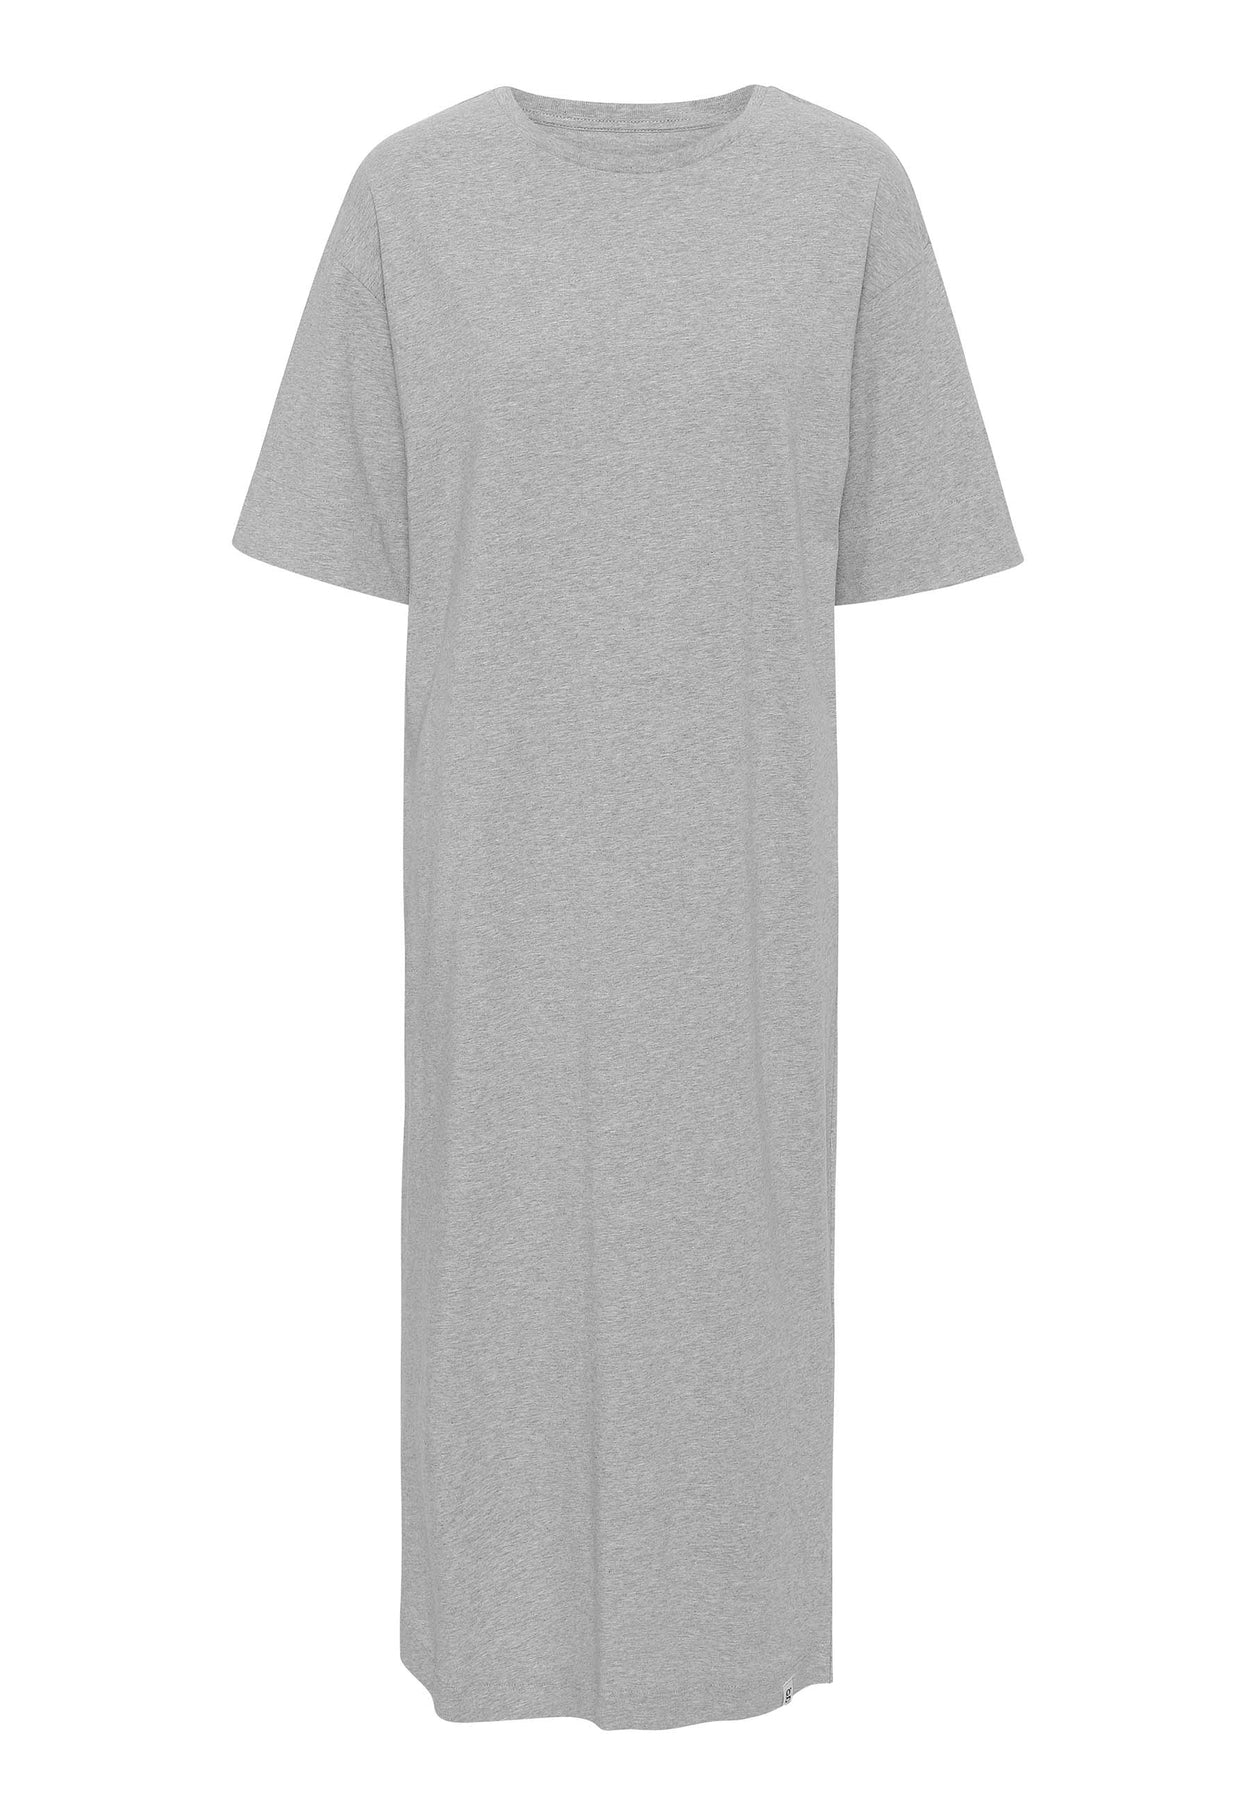 GROBUND Nora t-shirtkjolen - den i grå mélange